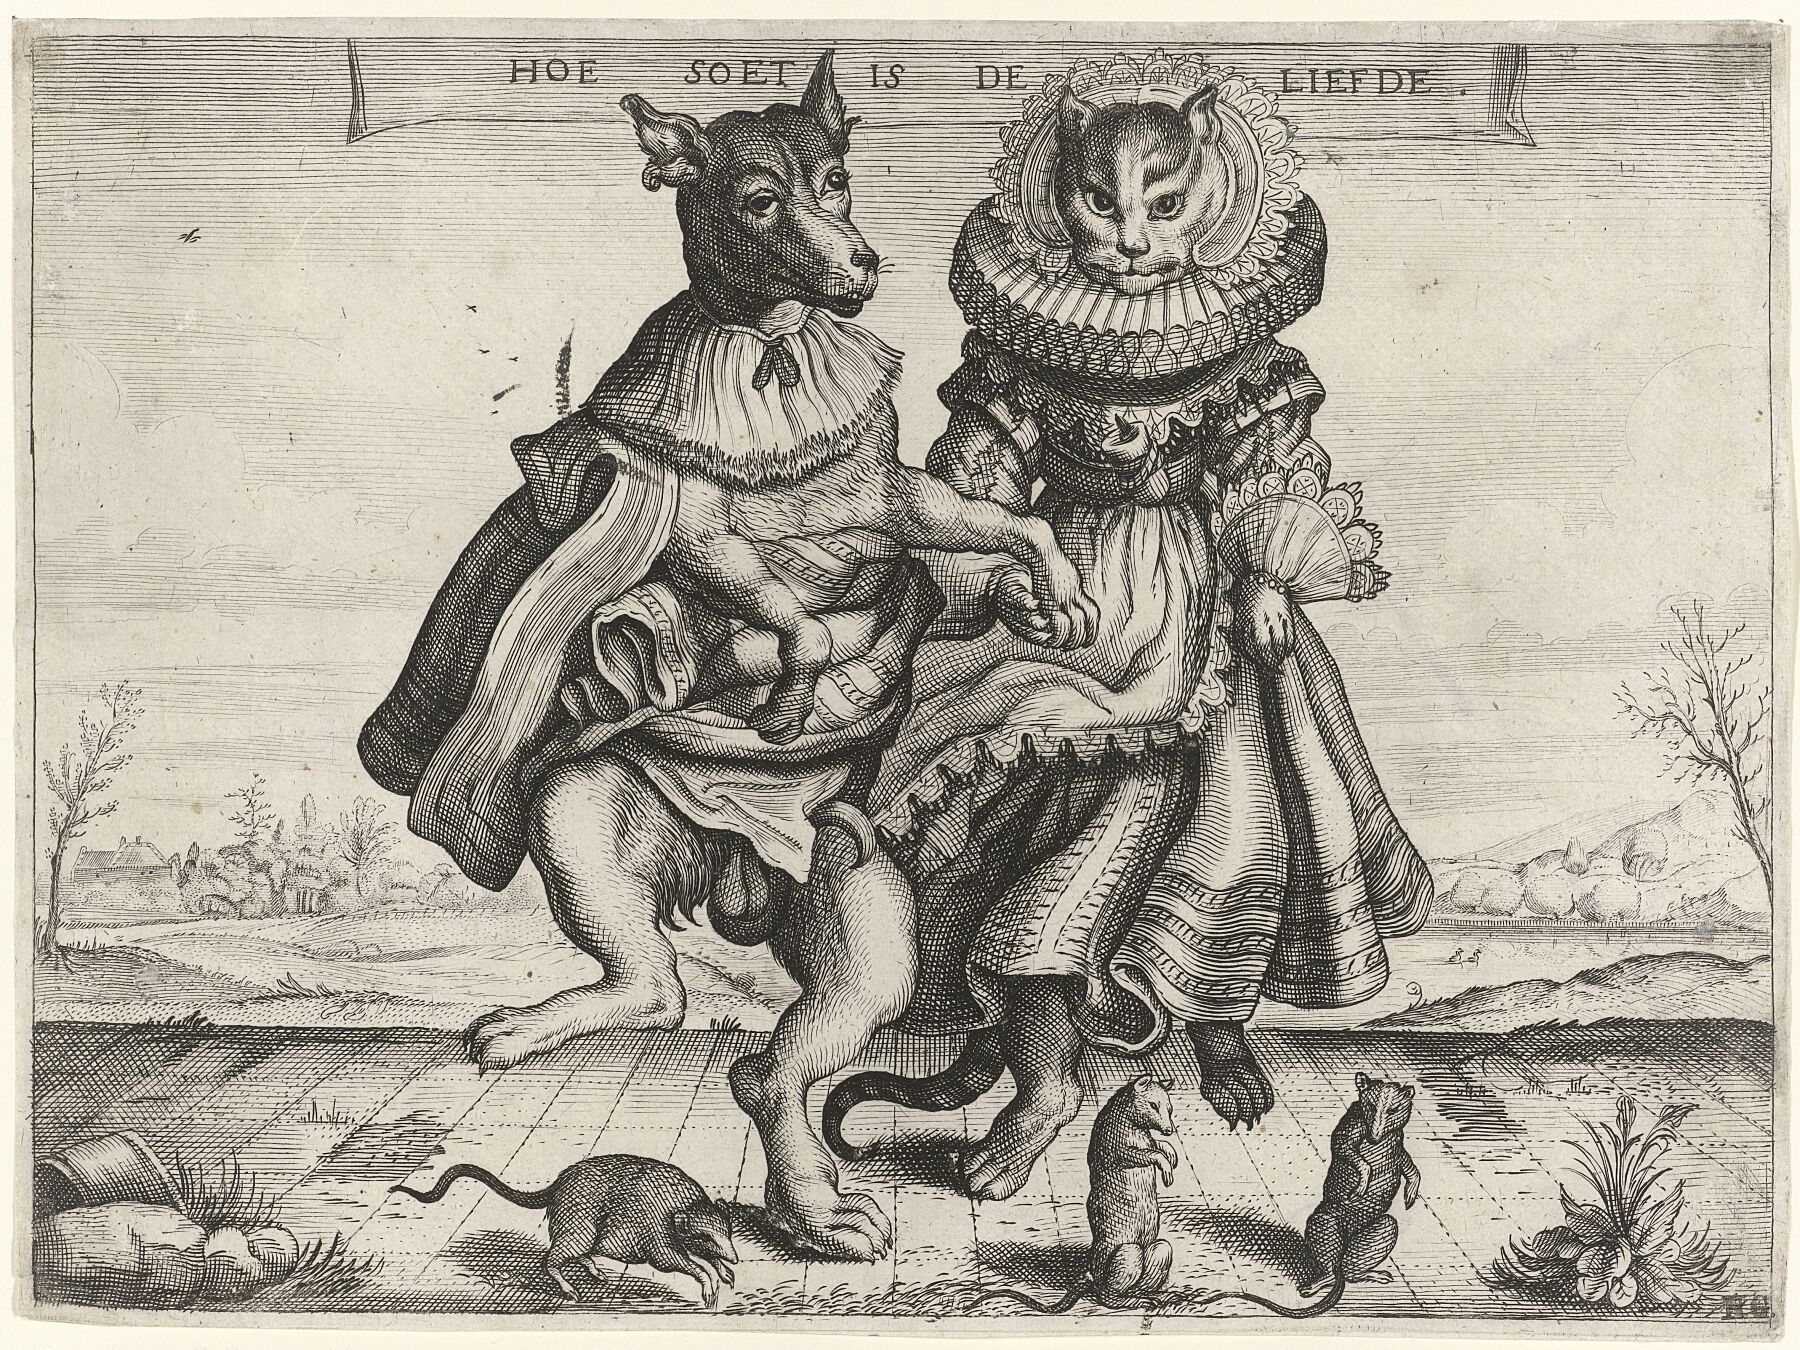 Dancing Dog and Cat, Adriaen Matham (attributed to), after Adriaen Matham, after Adriaen Pietersz van de Venne, 1620 - 1660